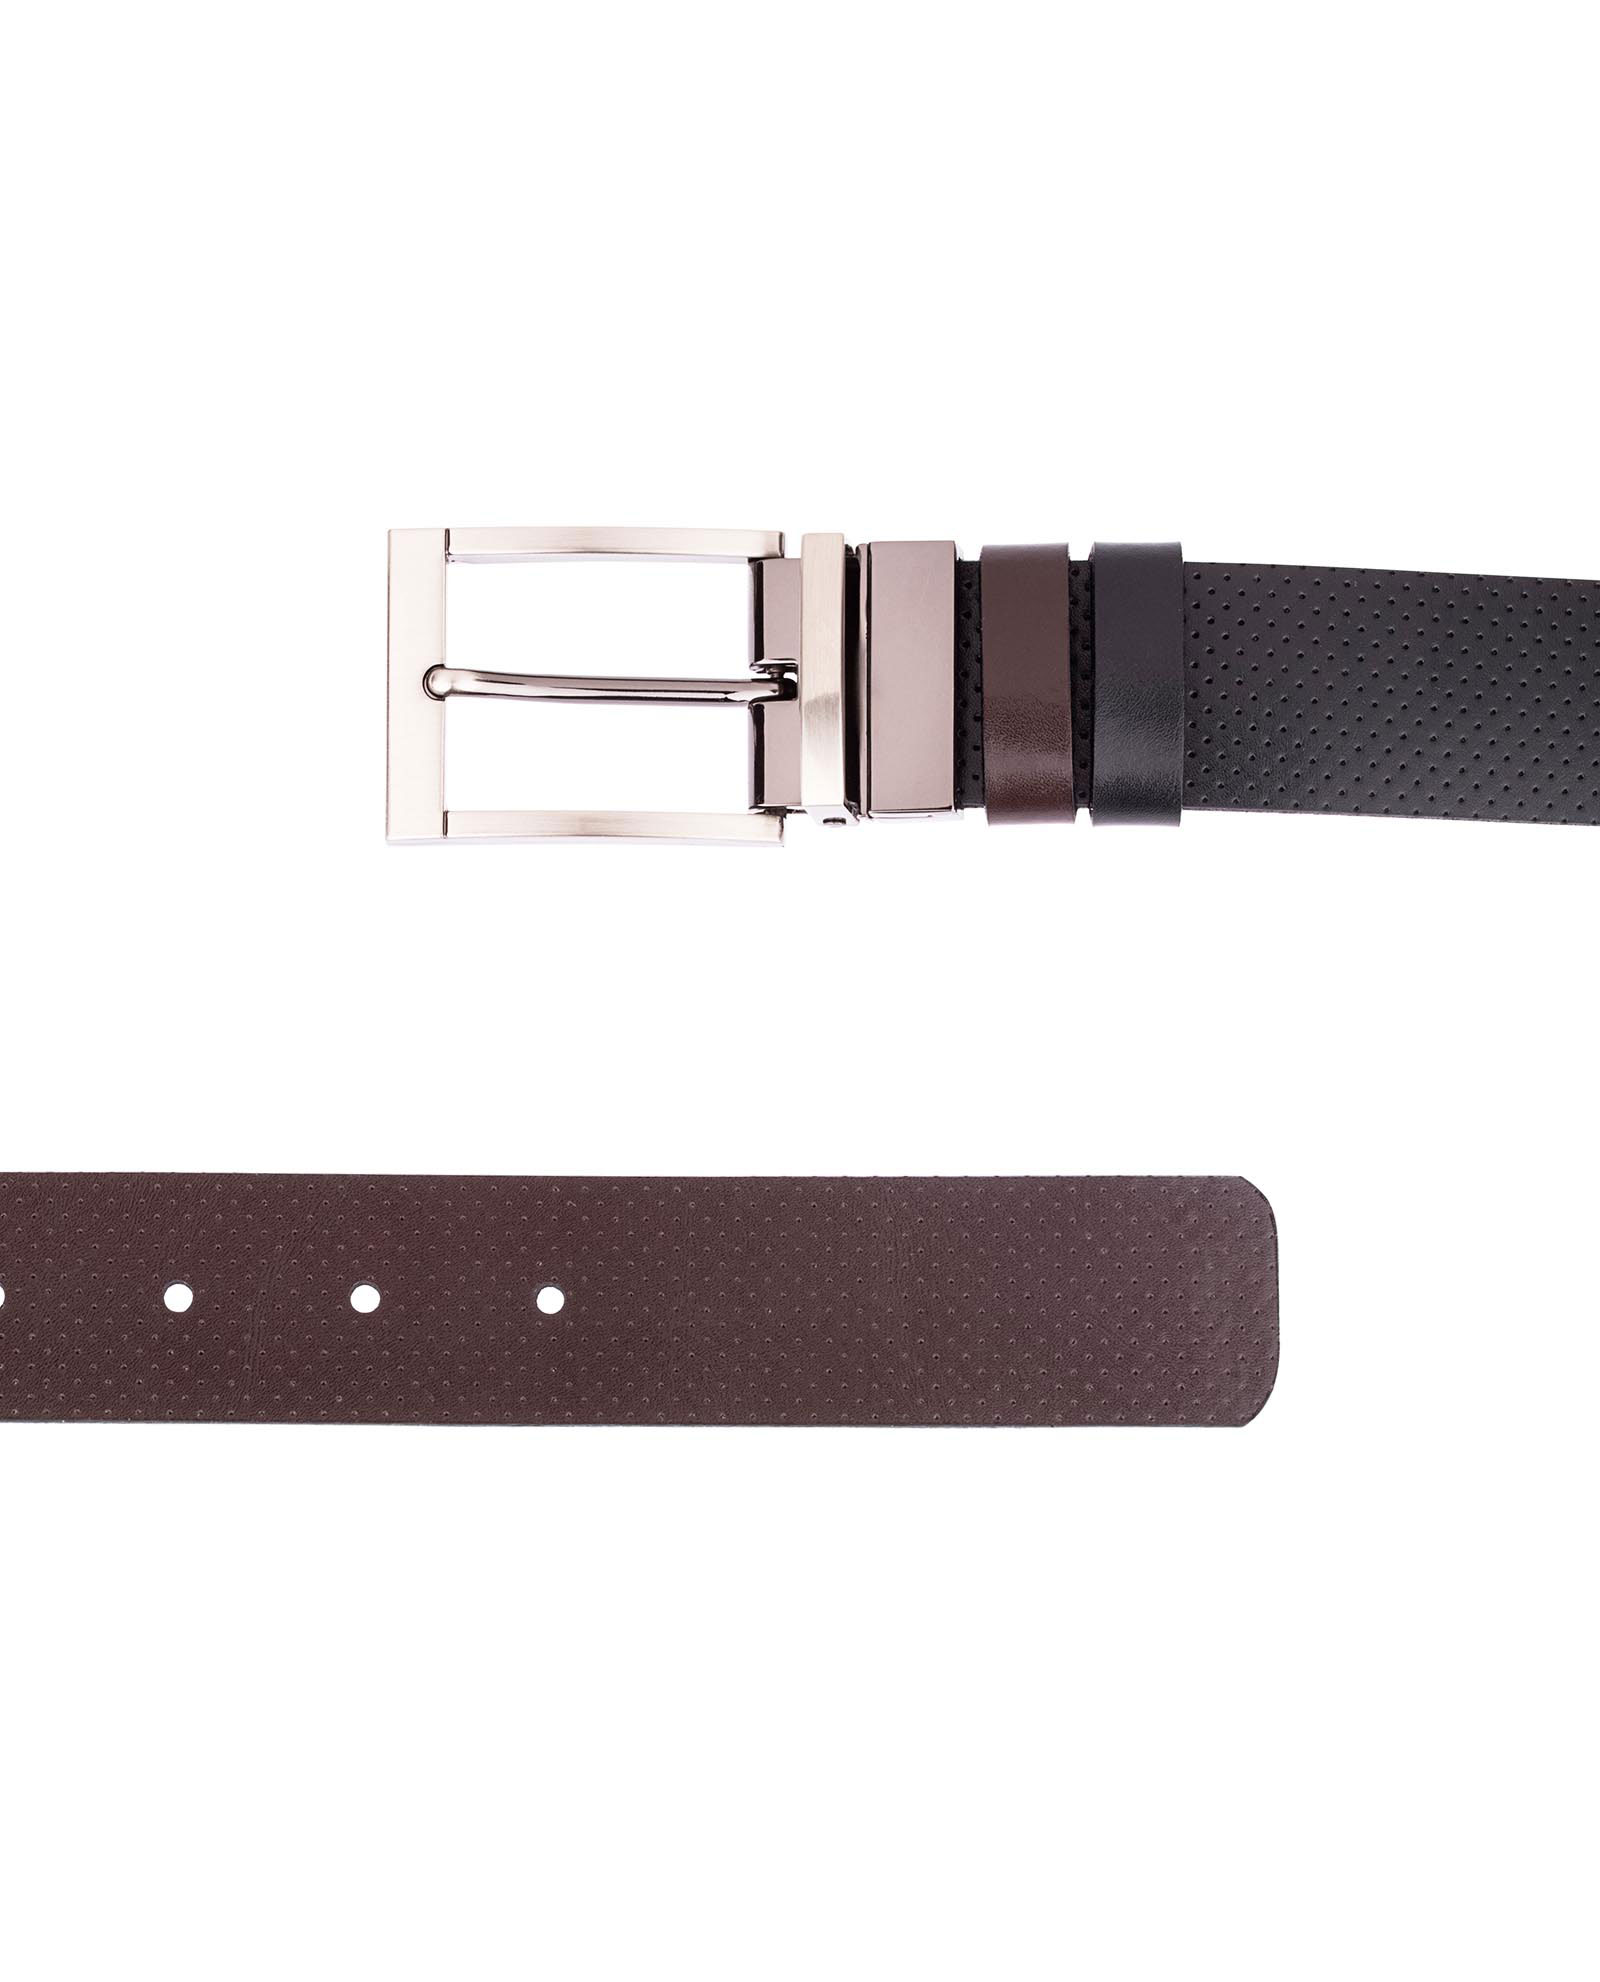 Buy Reversible Men's Belt - Black Brown Perforated Leather - Free Ship